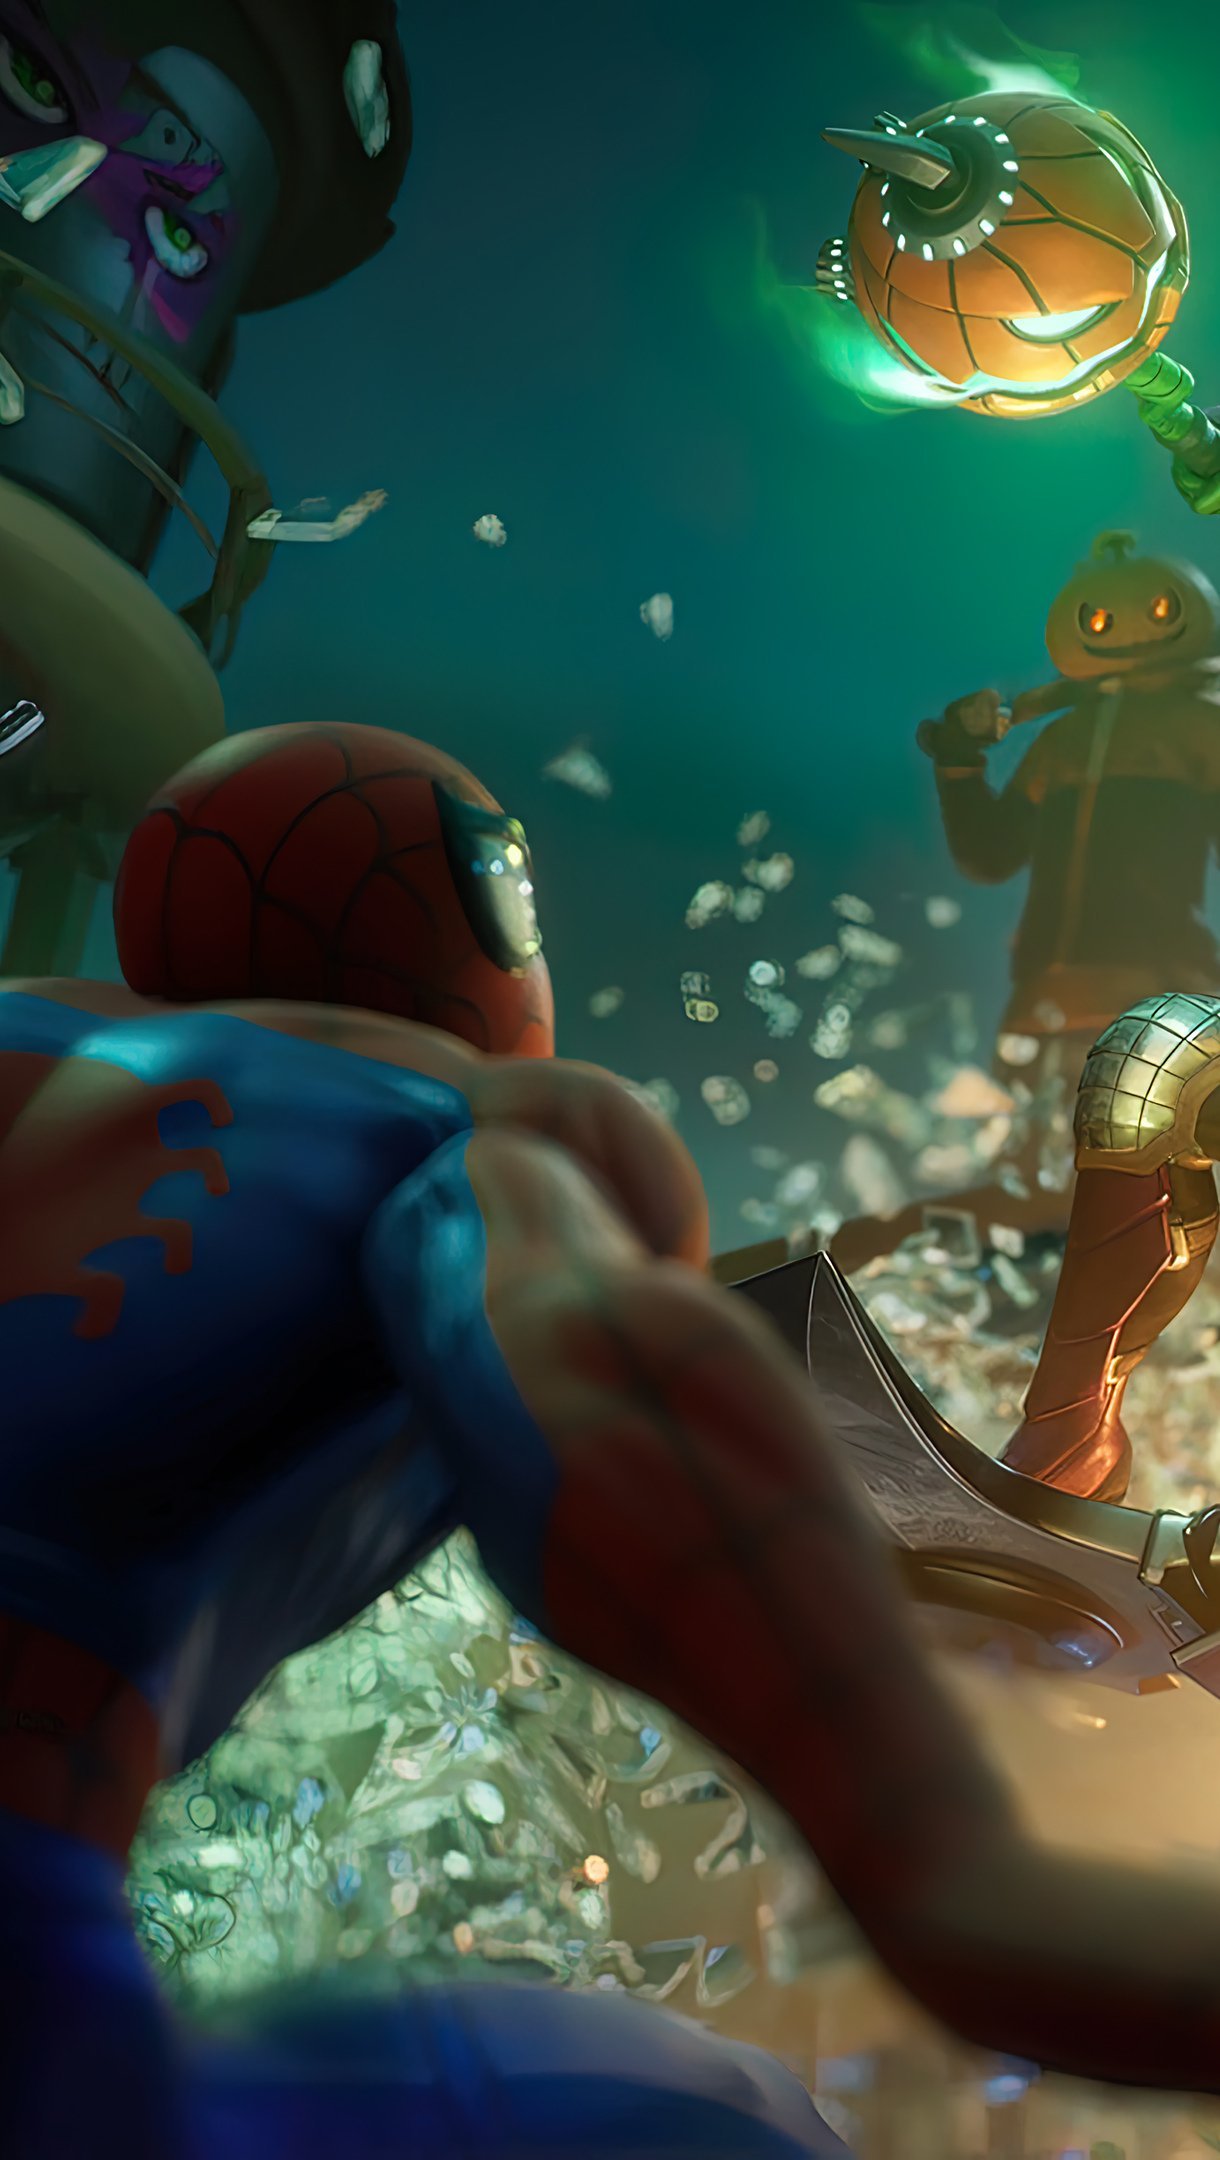 Fondos de pantalla Duende Verde contra Spider Man Fortnite Vertical